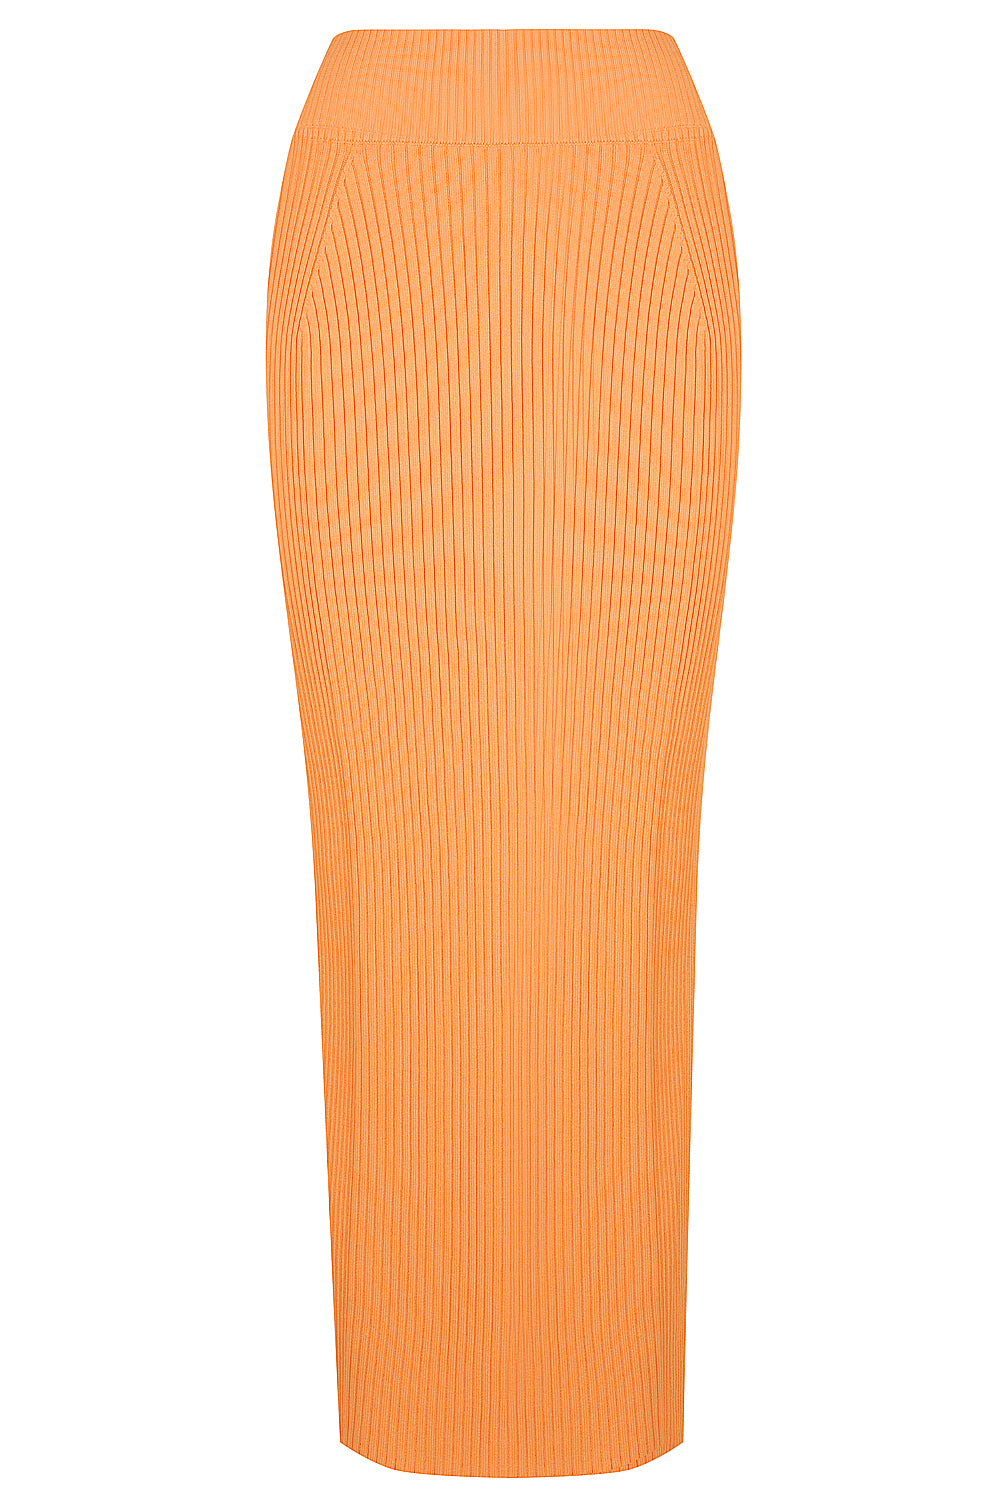 The Pisco Knit Skirt - Flame Orange